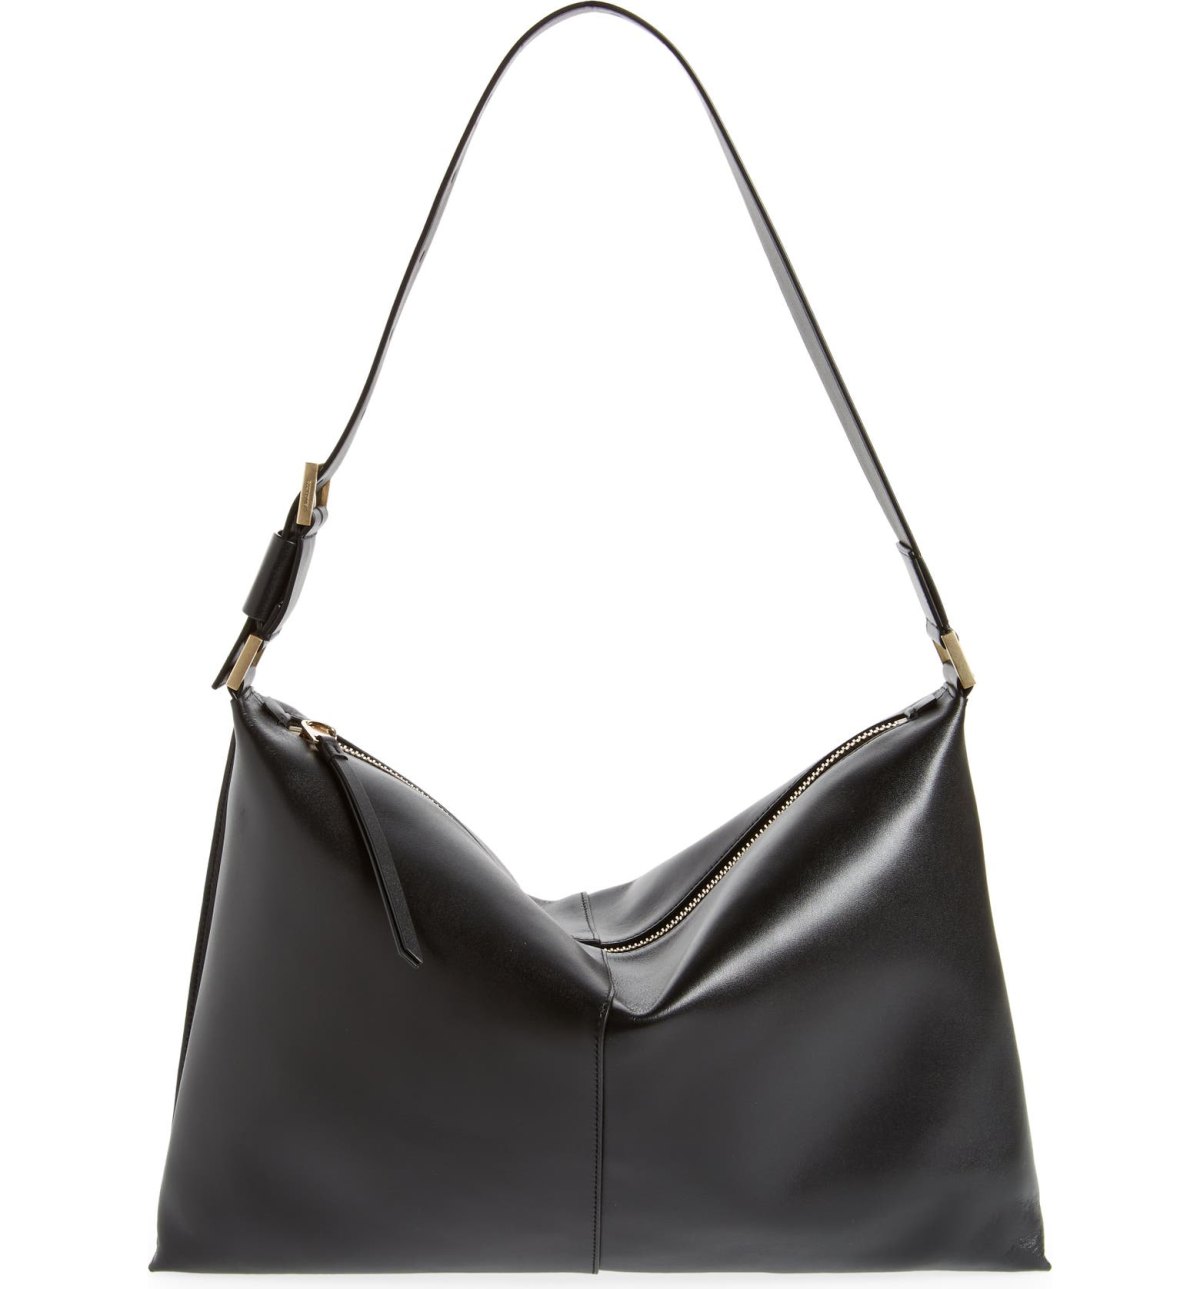 Top 20 Best Handbags Under $100 - Fashion — Live Love Blank